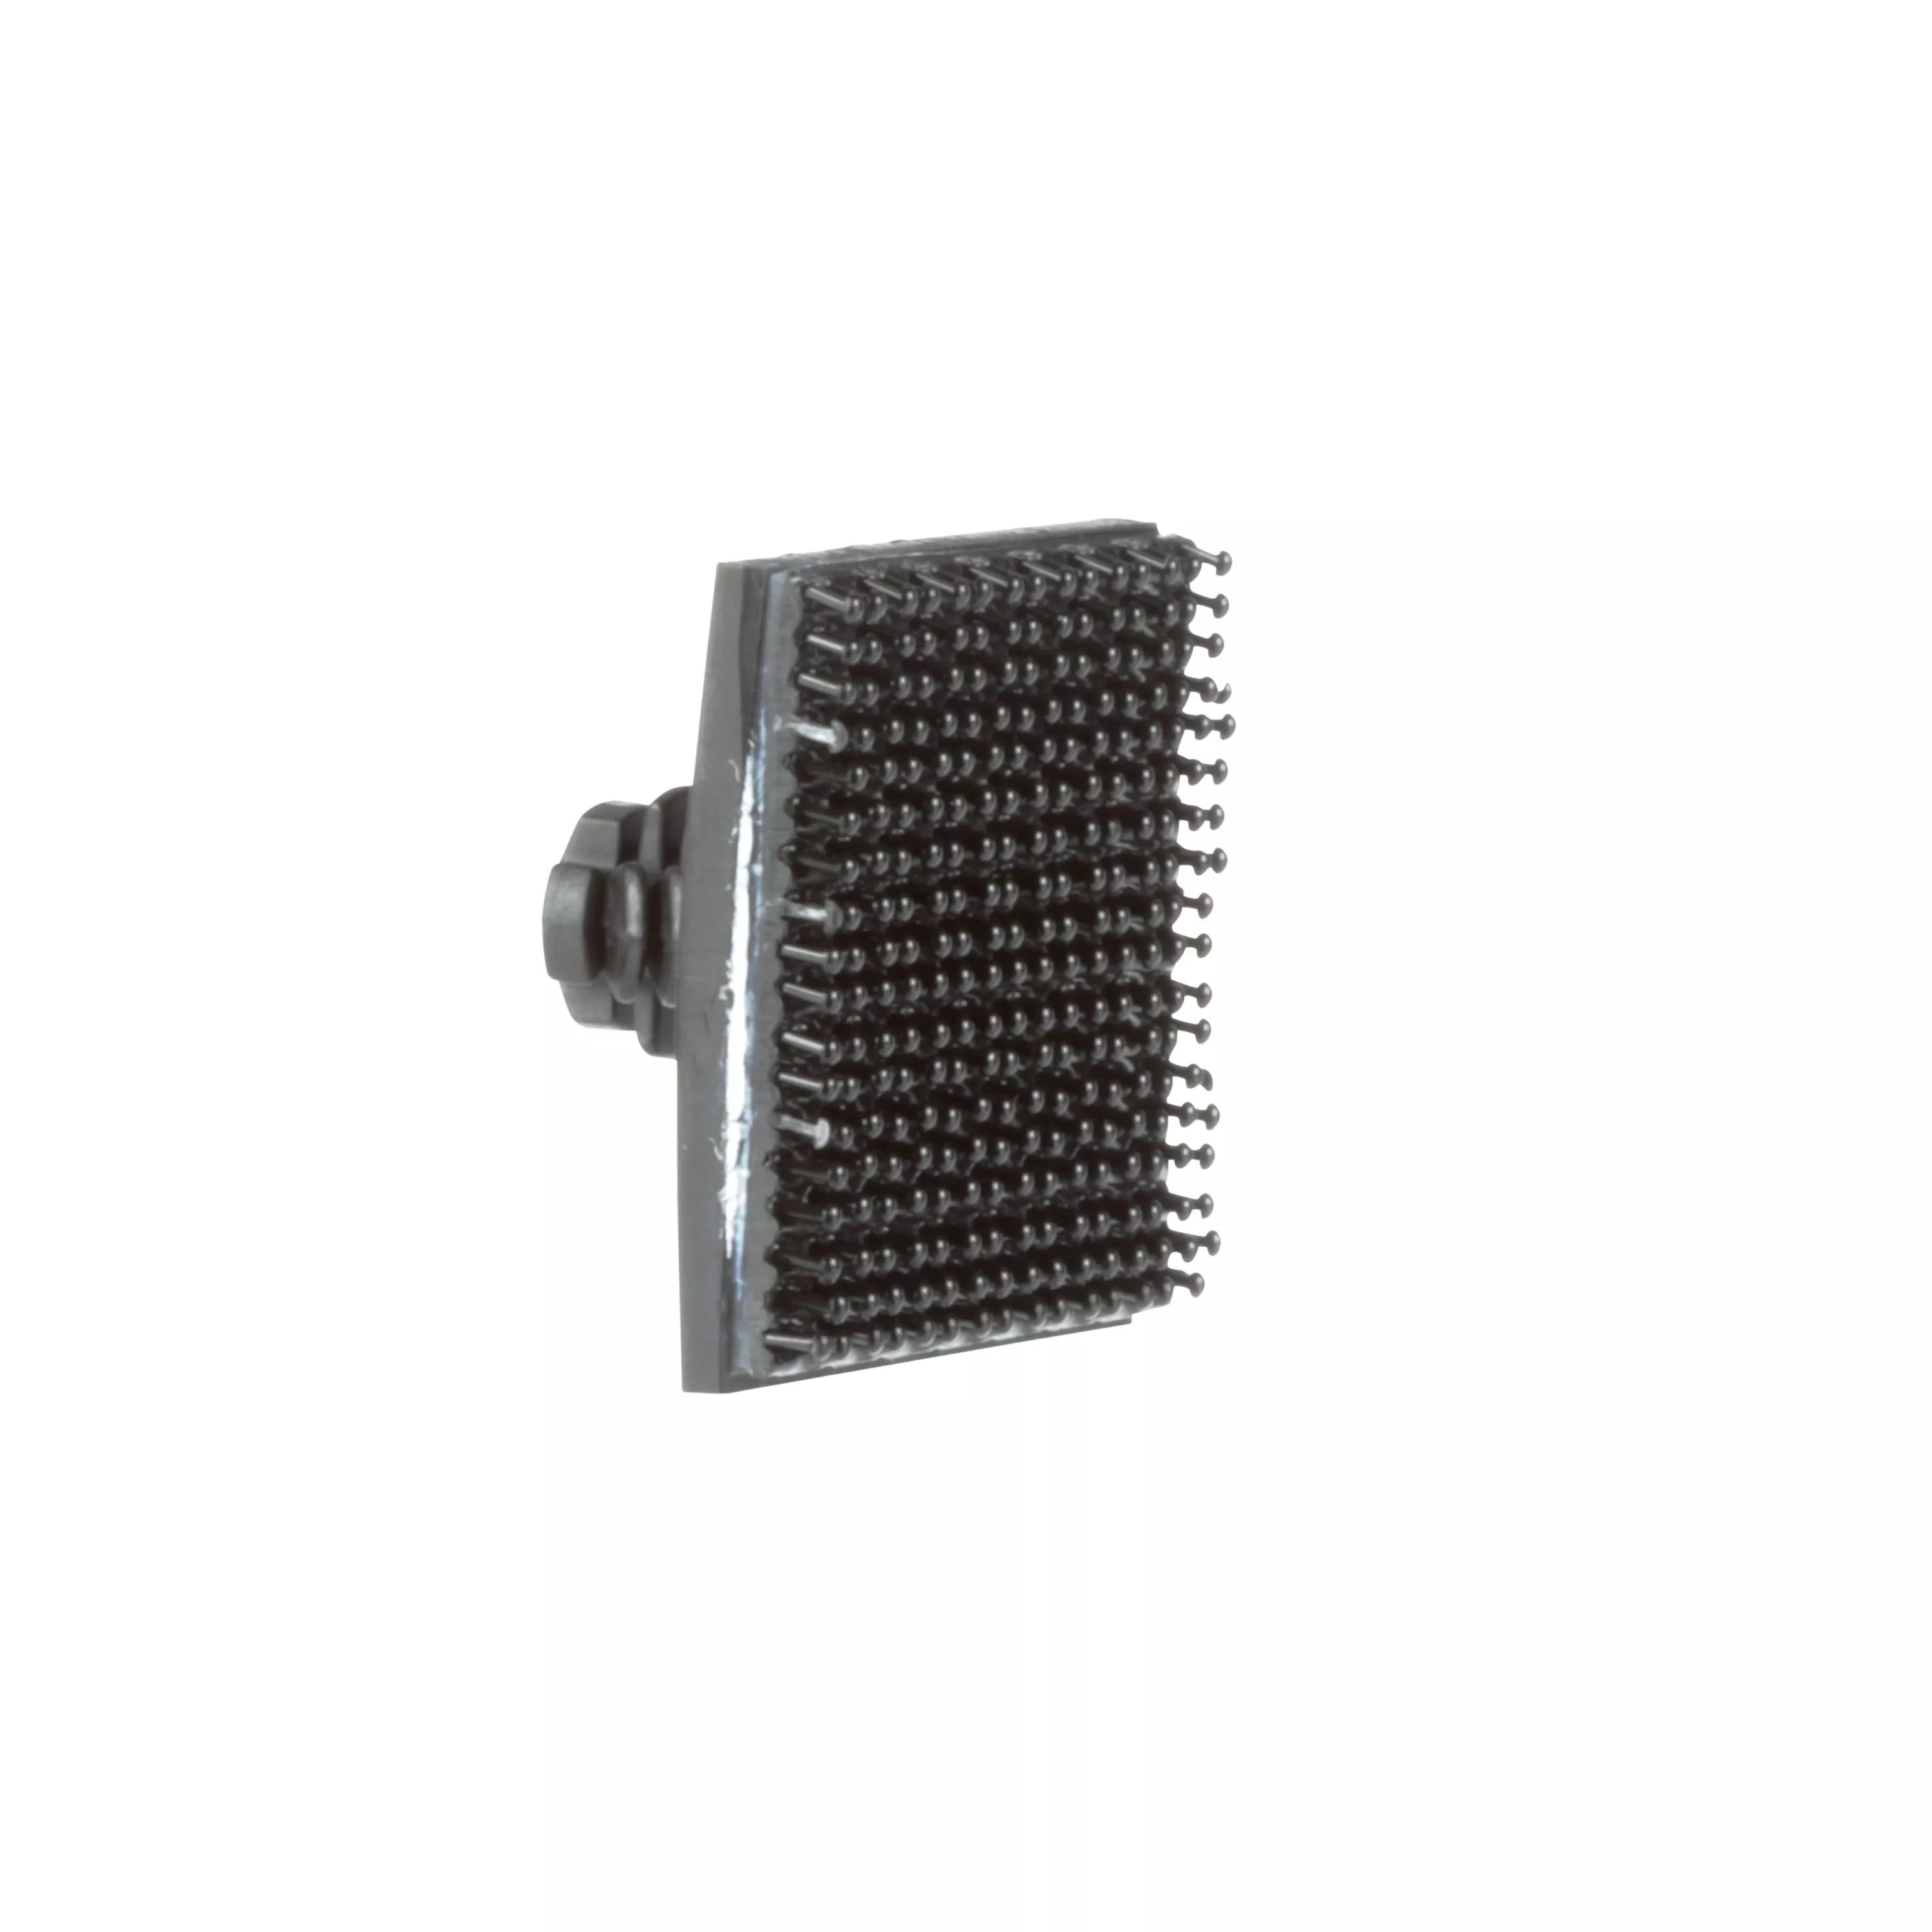 3M™ Dual Lock™ Reclosable Fastener SJ3209, Pop-in Piece Part, Stem
Density 250, Black, 5000 Piece/Case